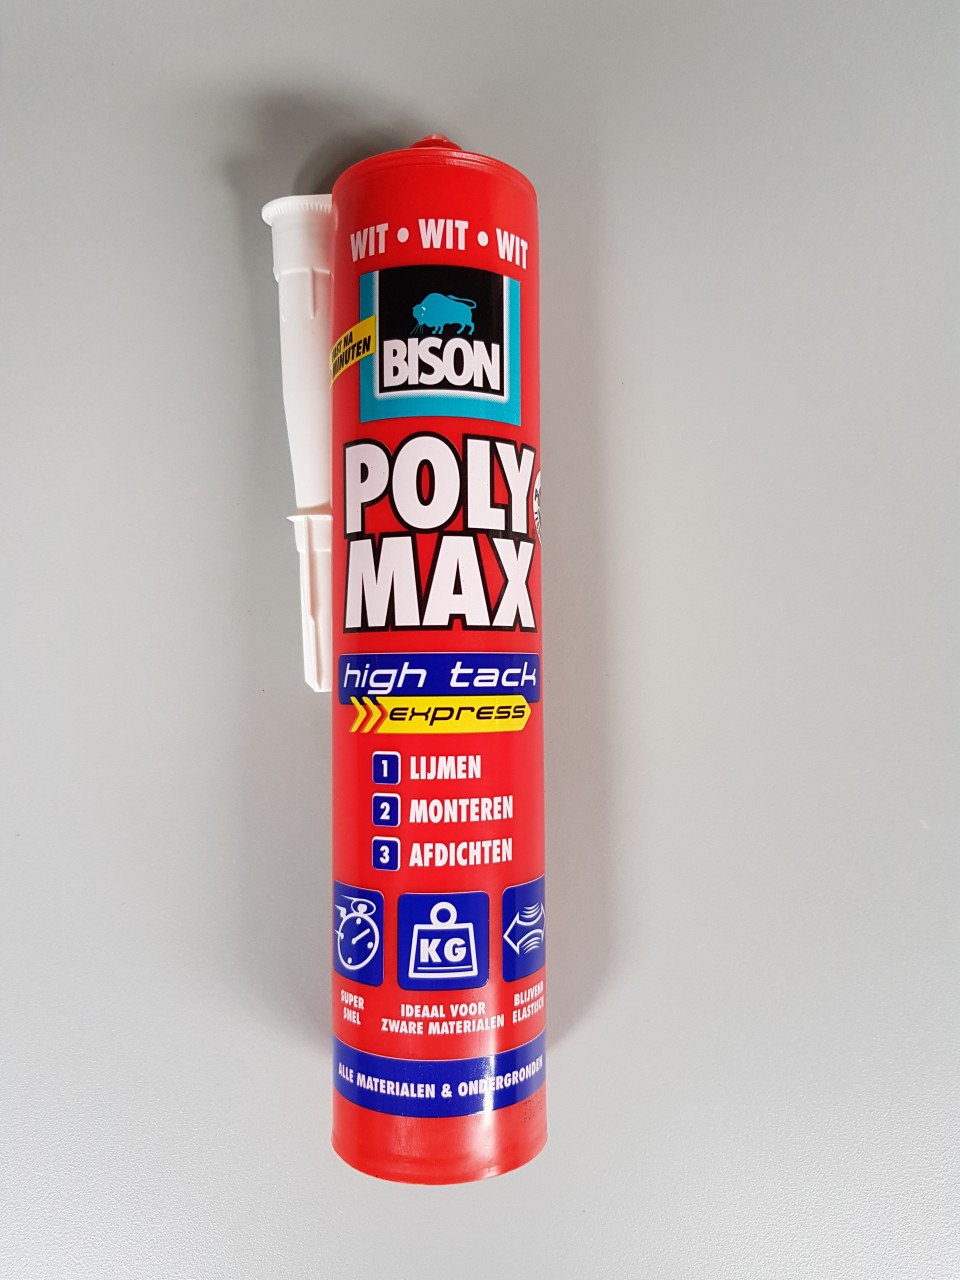 Bison polymax high tack express wit Bison polymax high tack express wit